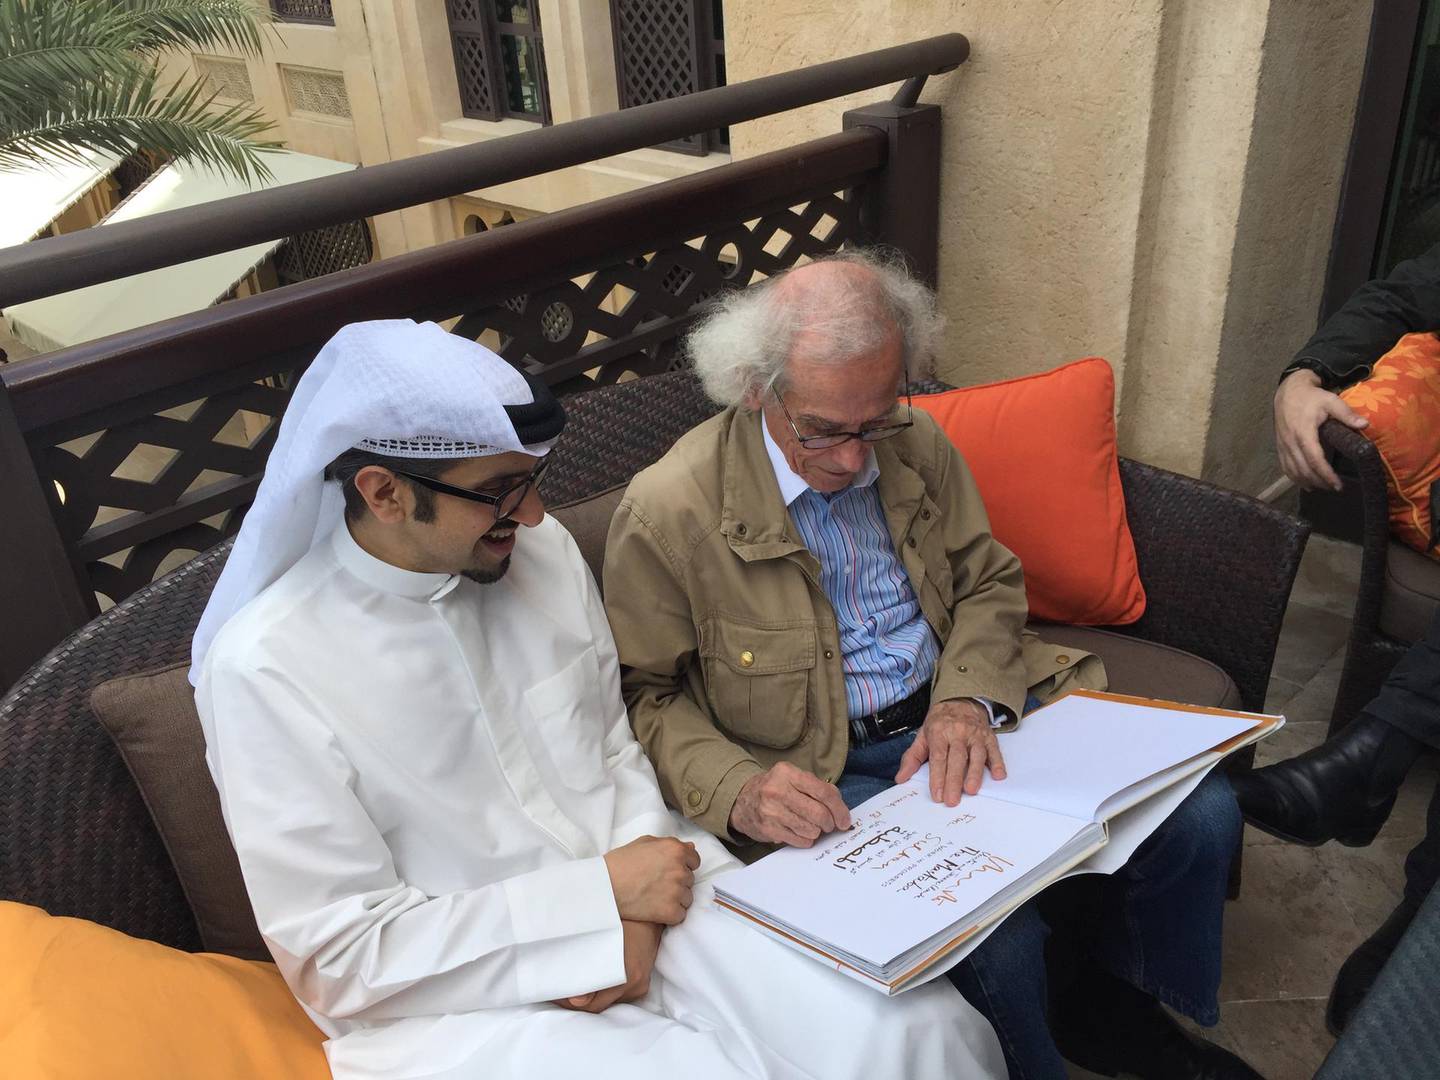 Sultan Sooud Al Qassemi with the artist Christo in 2015. Courtesy Sultan Sooud Al Qassemi